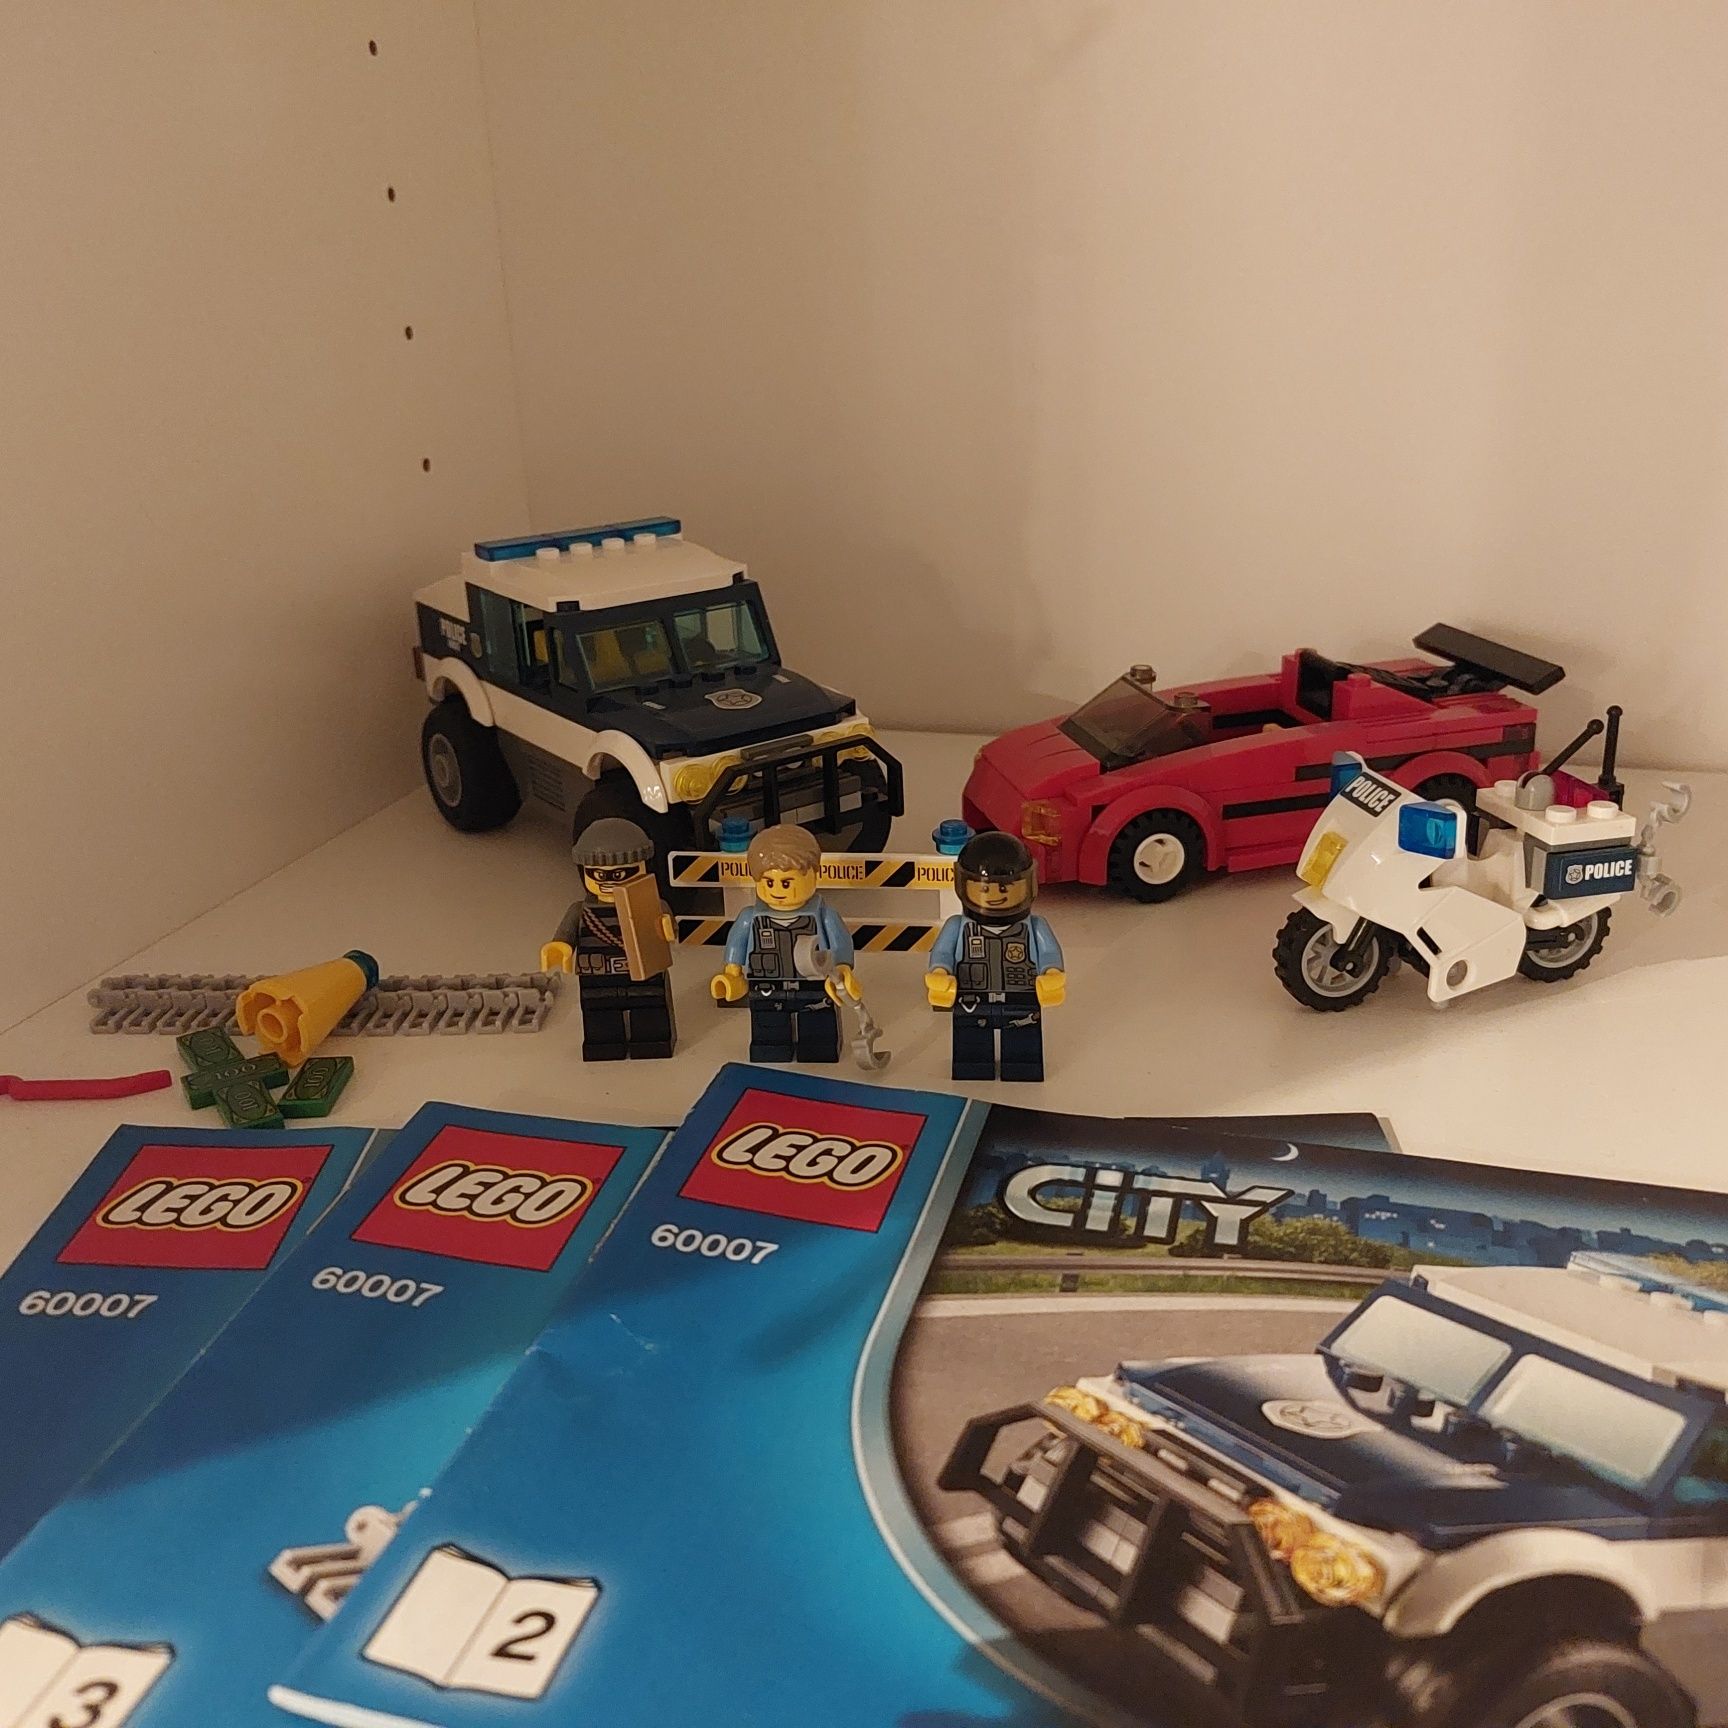 Zestaw LEGO 60007 High Speed Chase (ekskluzywna figurka)